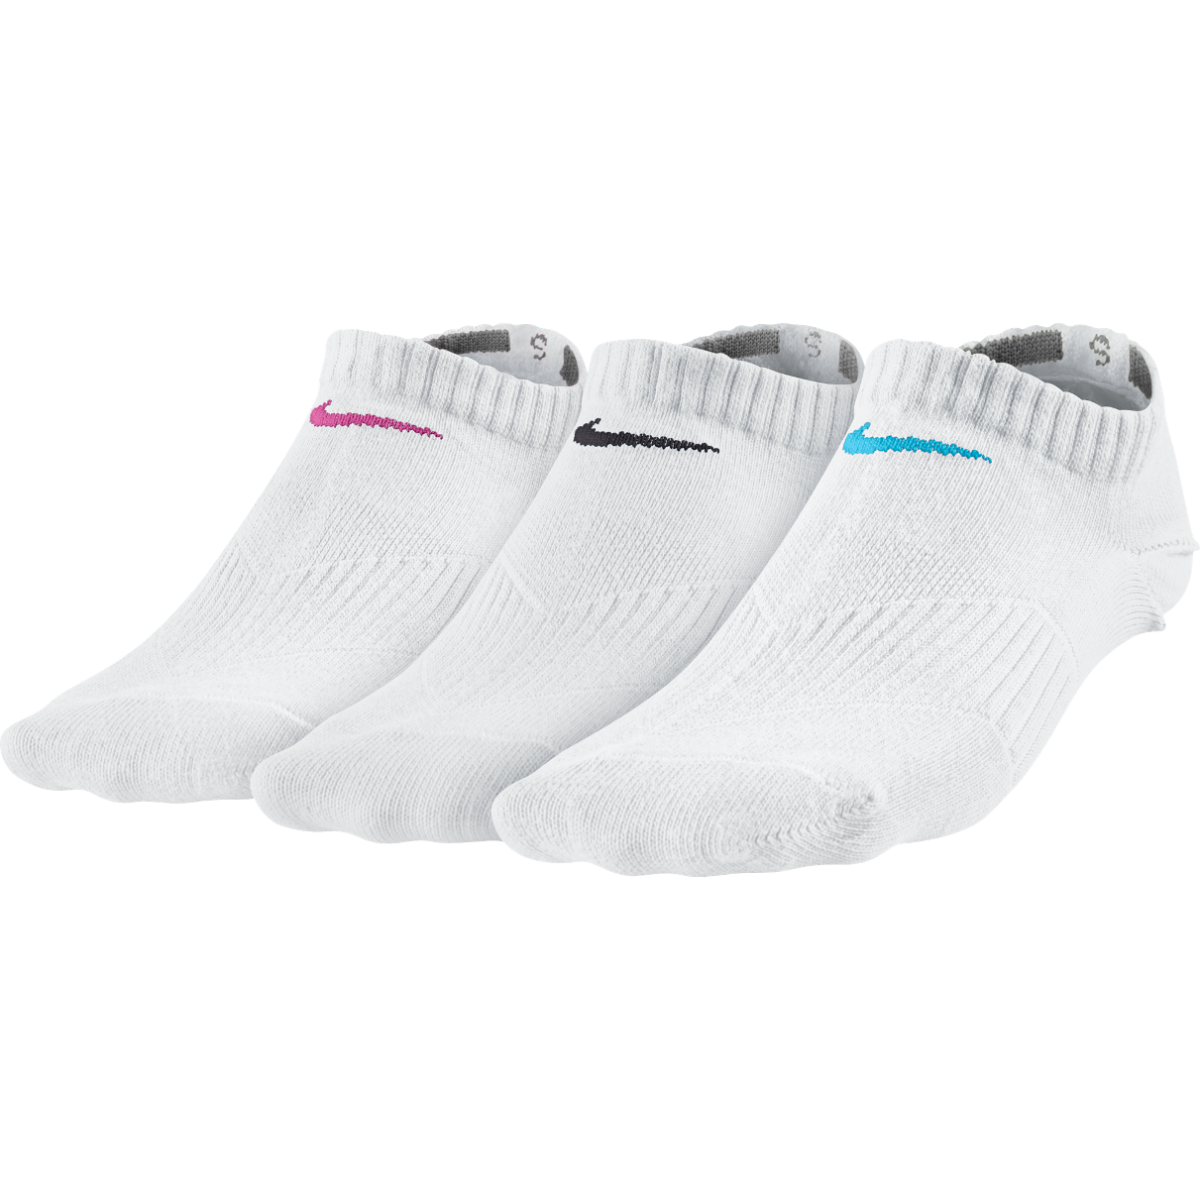 Nike Lightweight Cotton Cushion No-Show Kids' Socks - 3 Pair